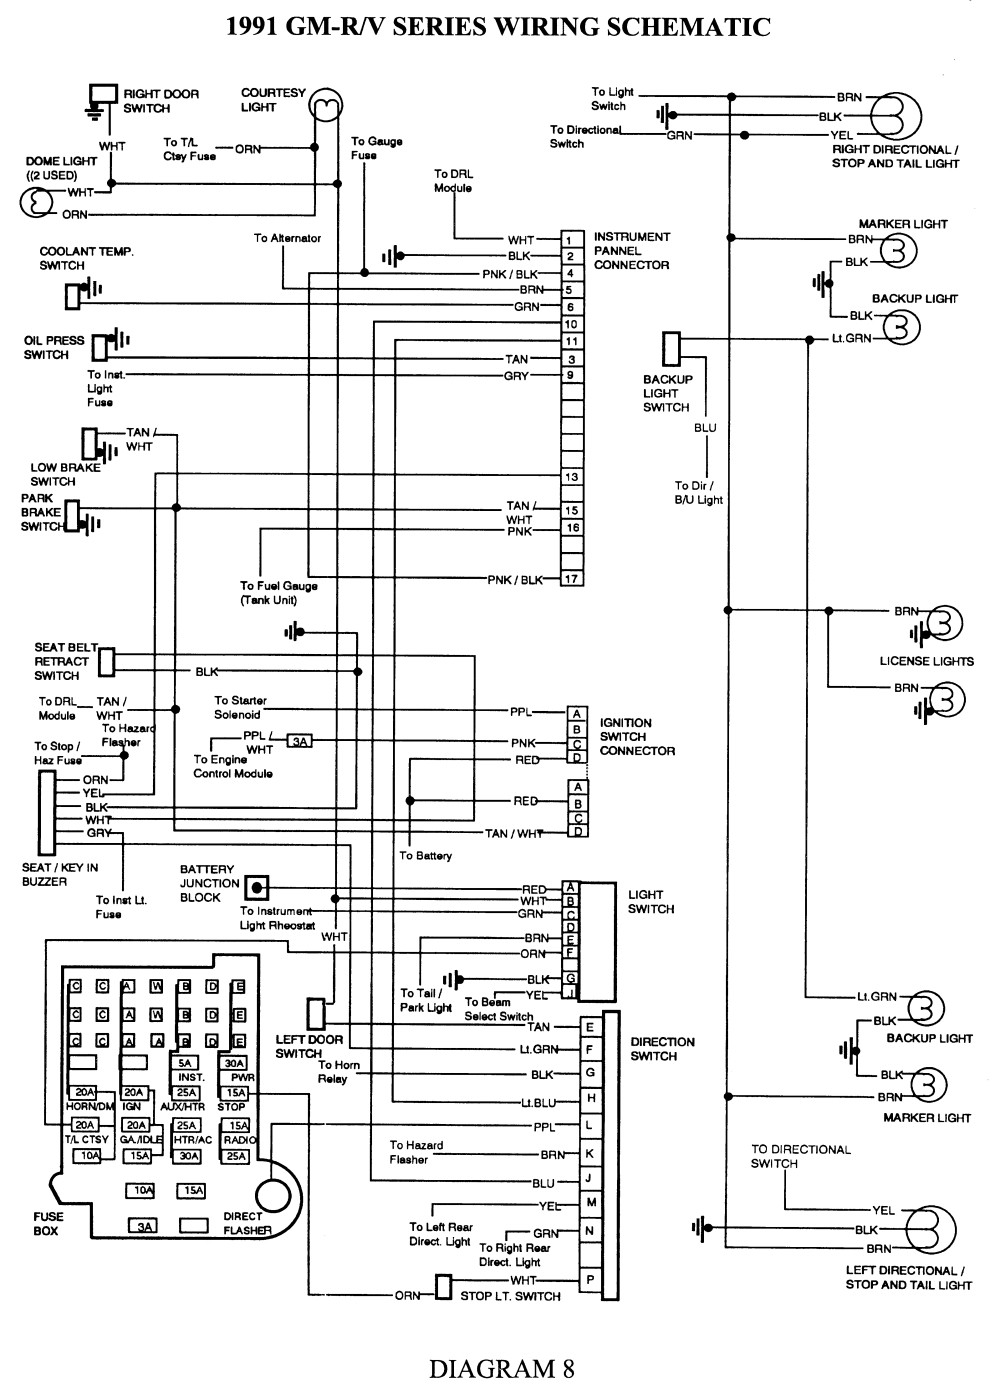 Repair Guides Wiring Diagrams Wiring Diagrams 2002 Chevy S10 Blazer Wiring Diagram Chevrolet Auto Wiring